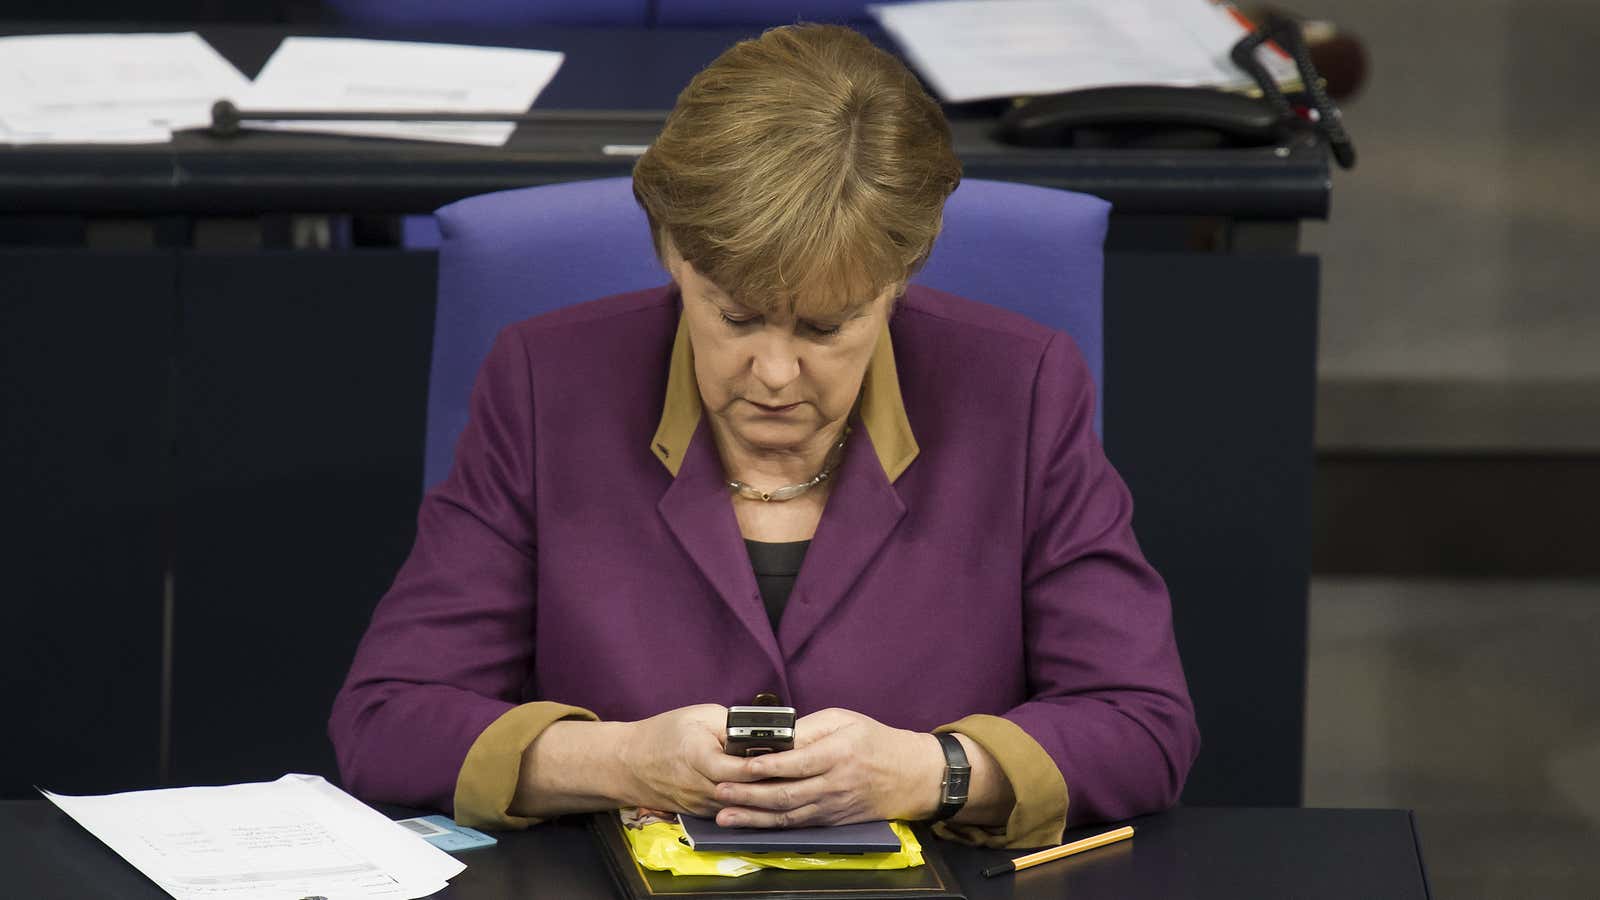 Angela Merkel likes to text, but doesn’t plan to tweet.